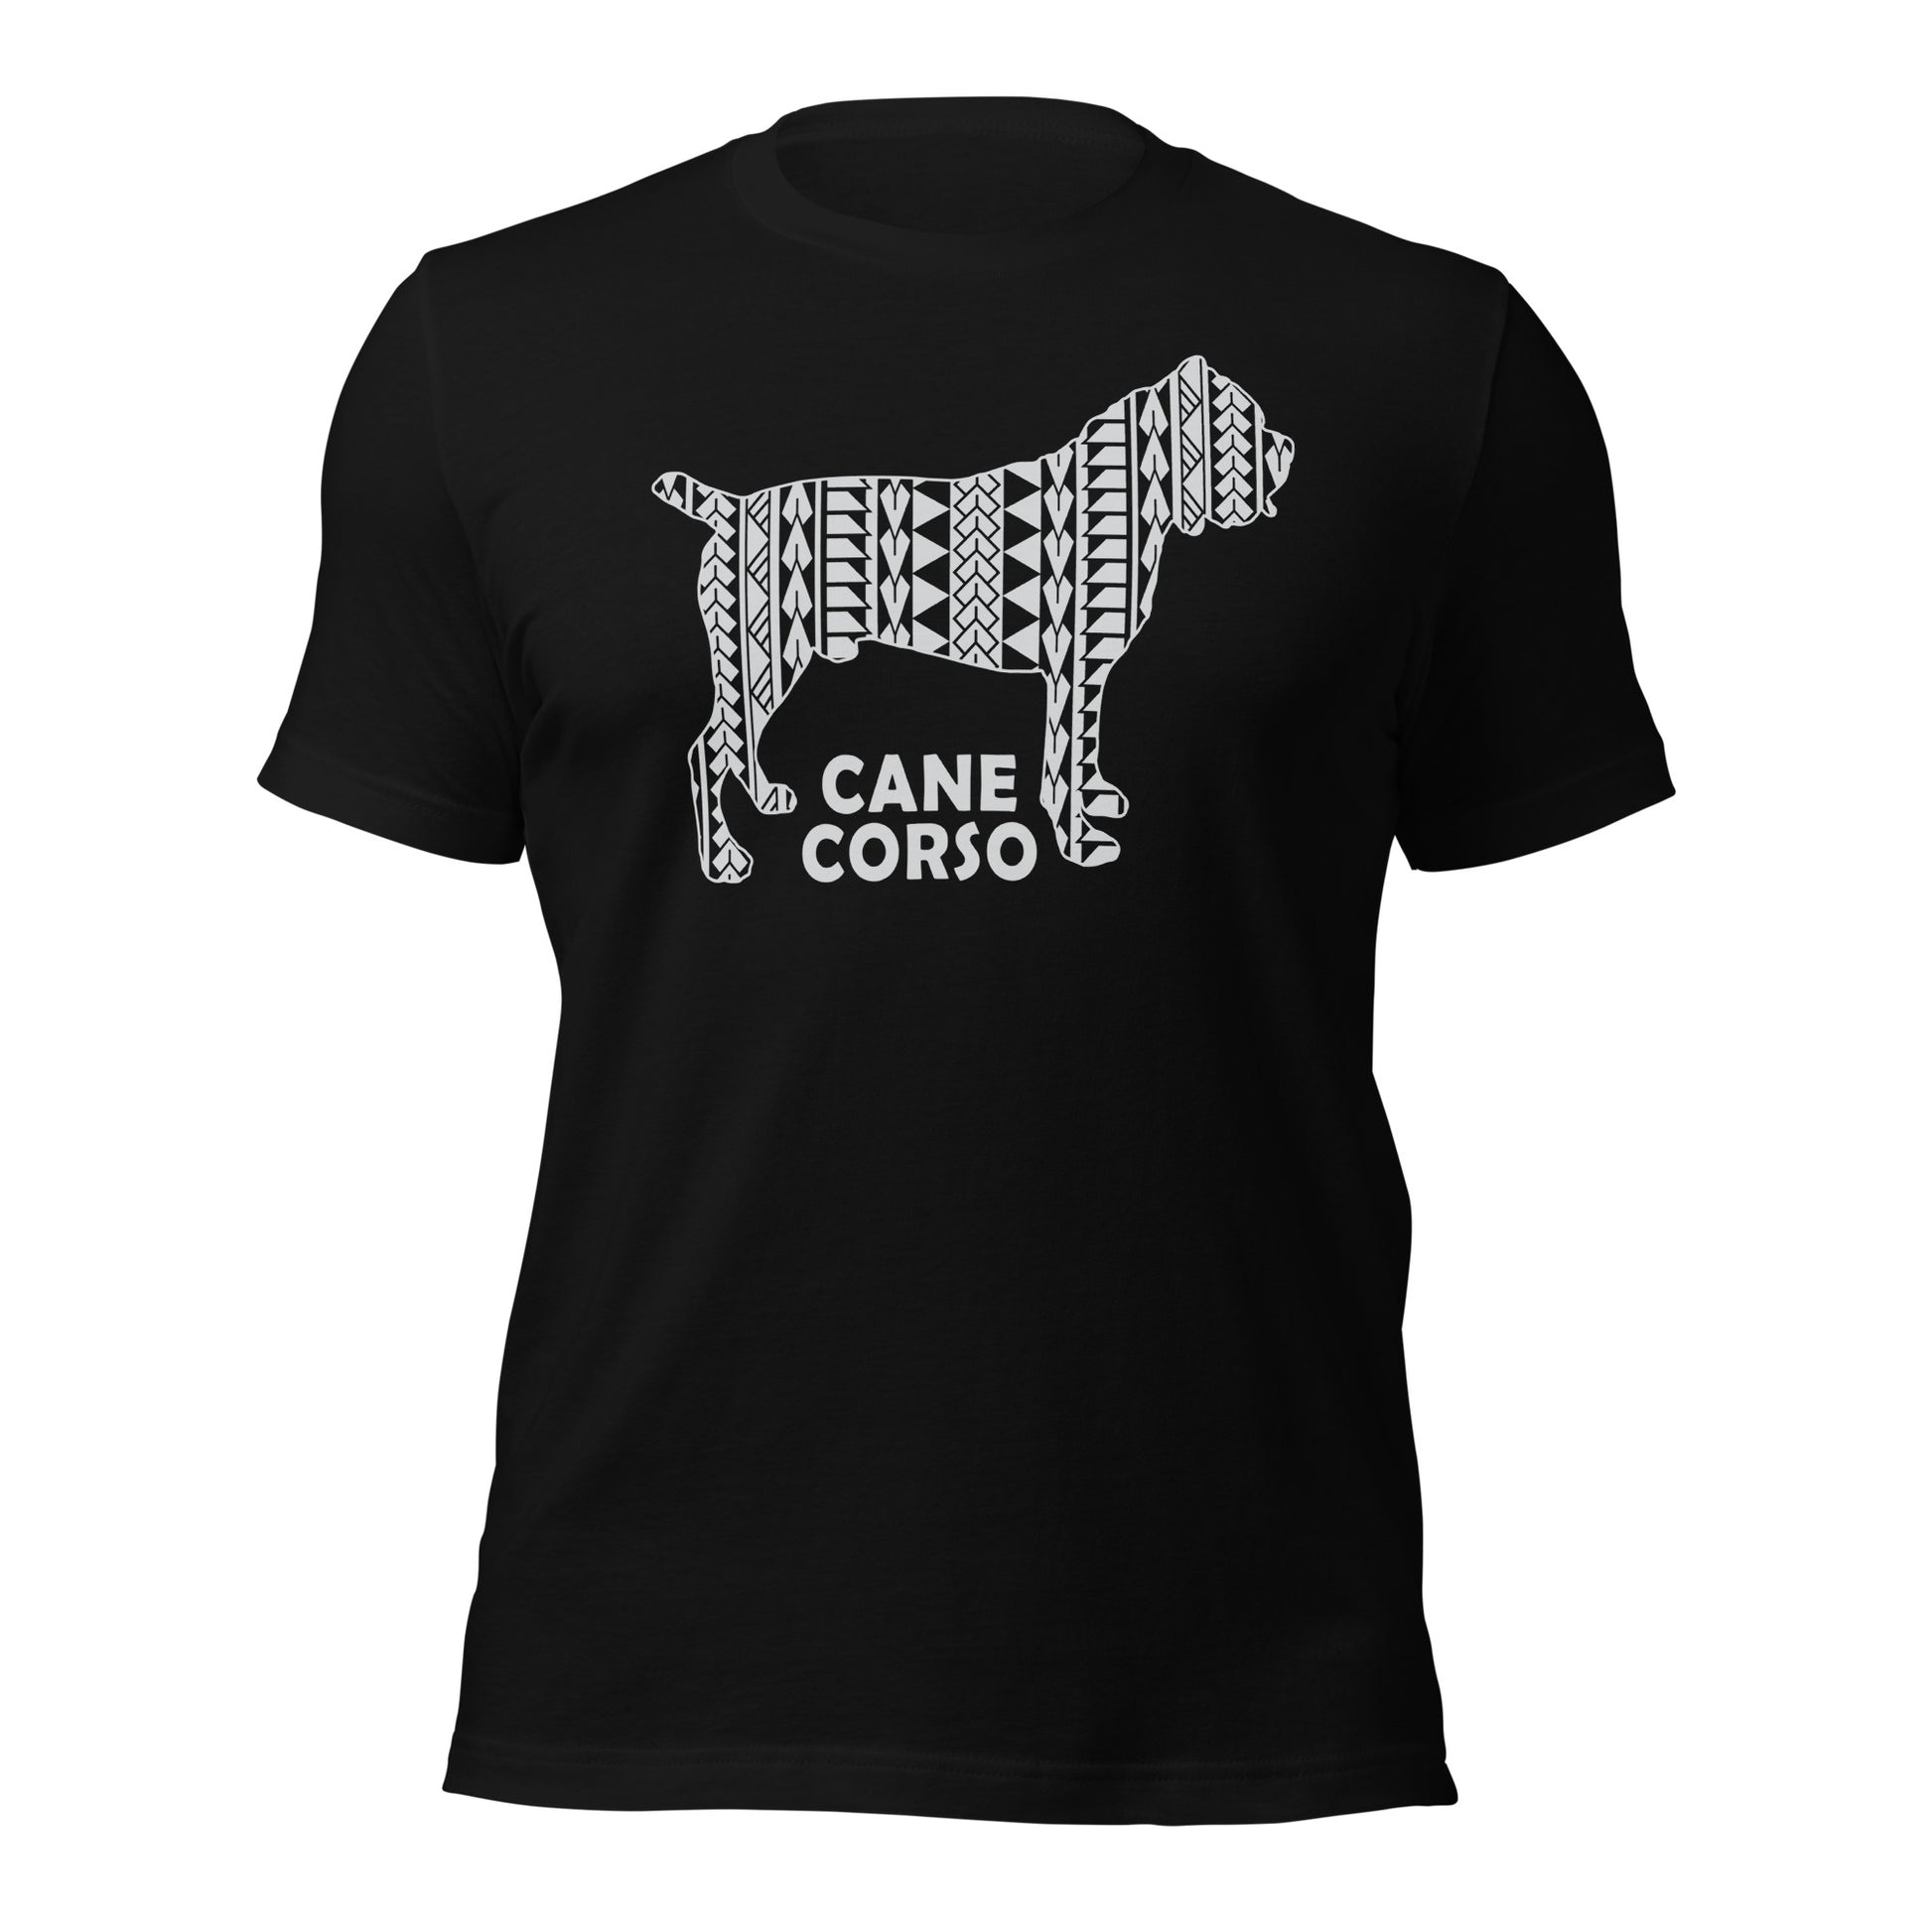 Cane Corso Polynesian t-shirt black by Dog Artistry.